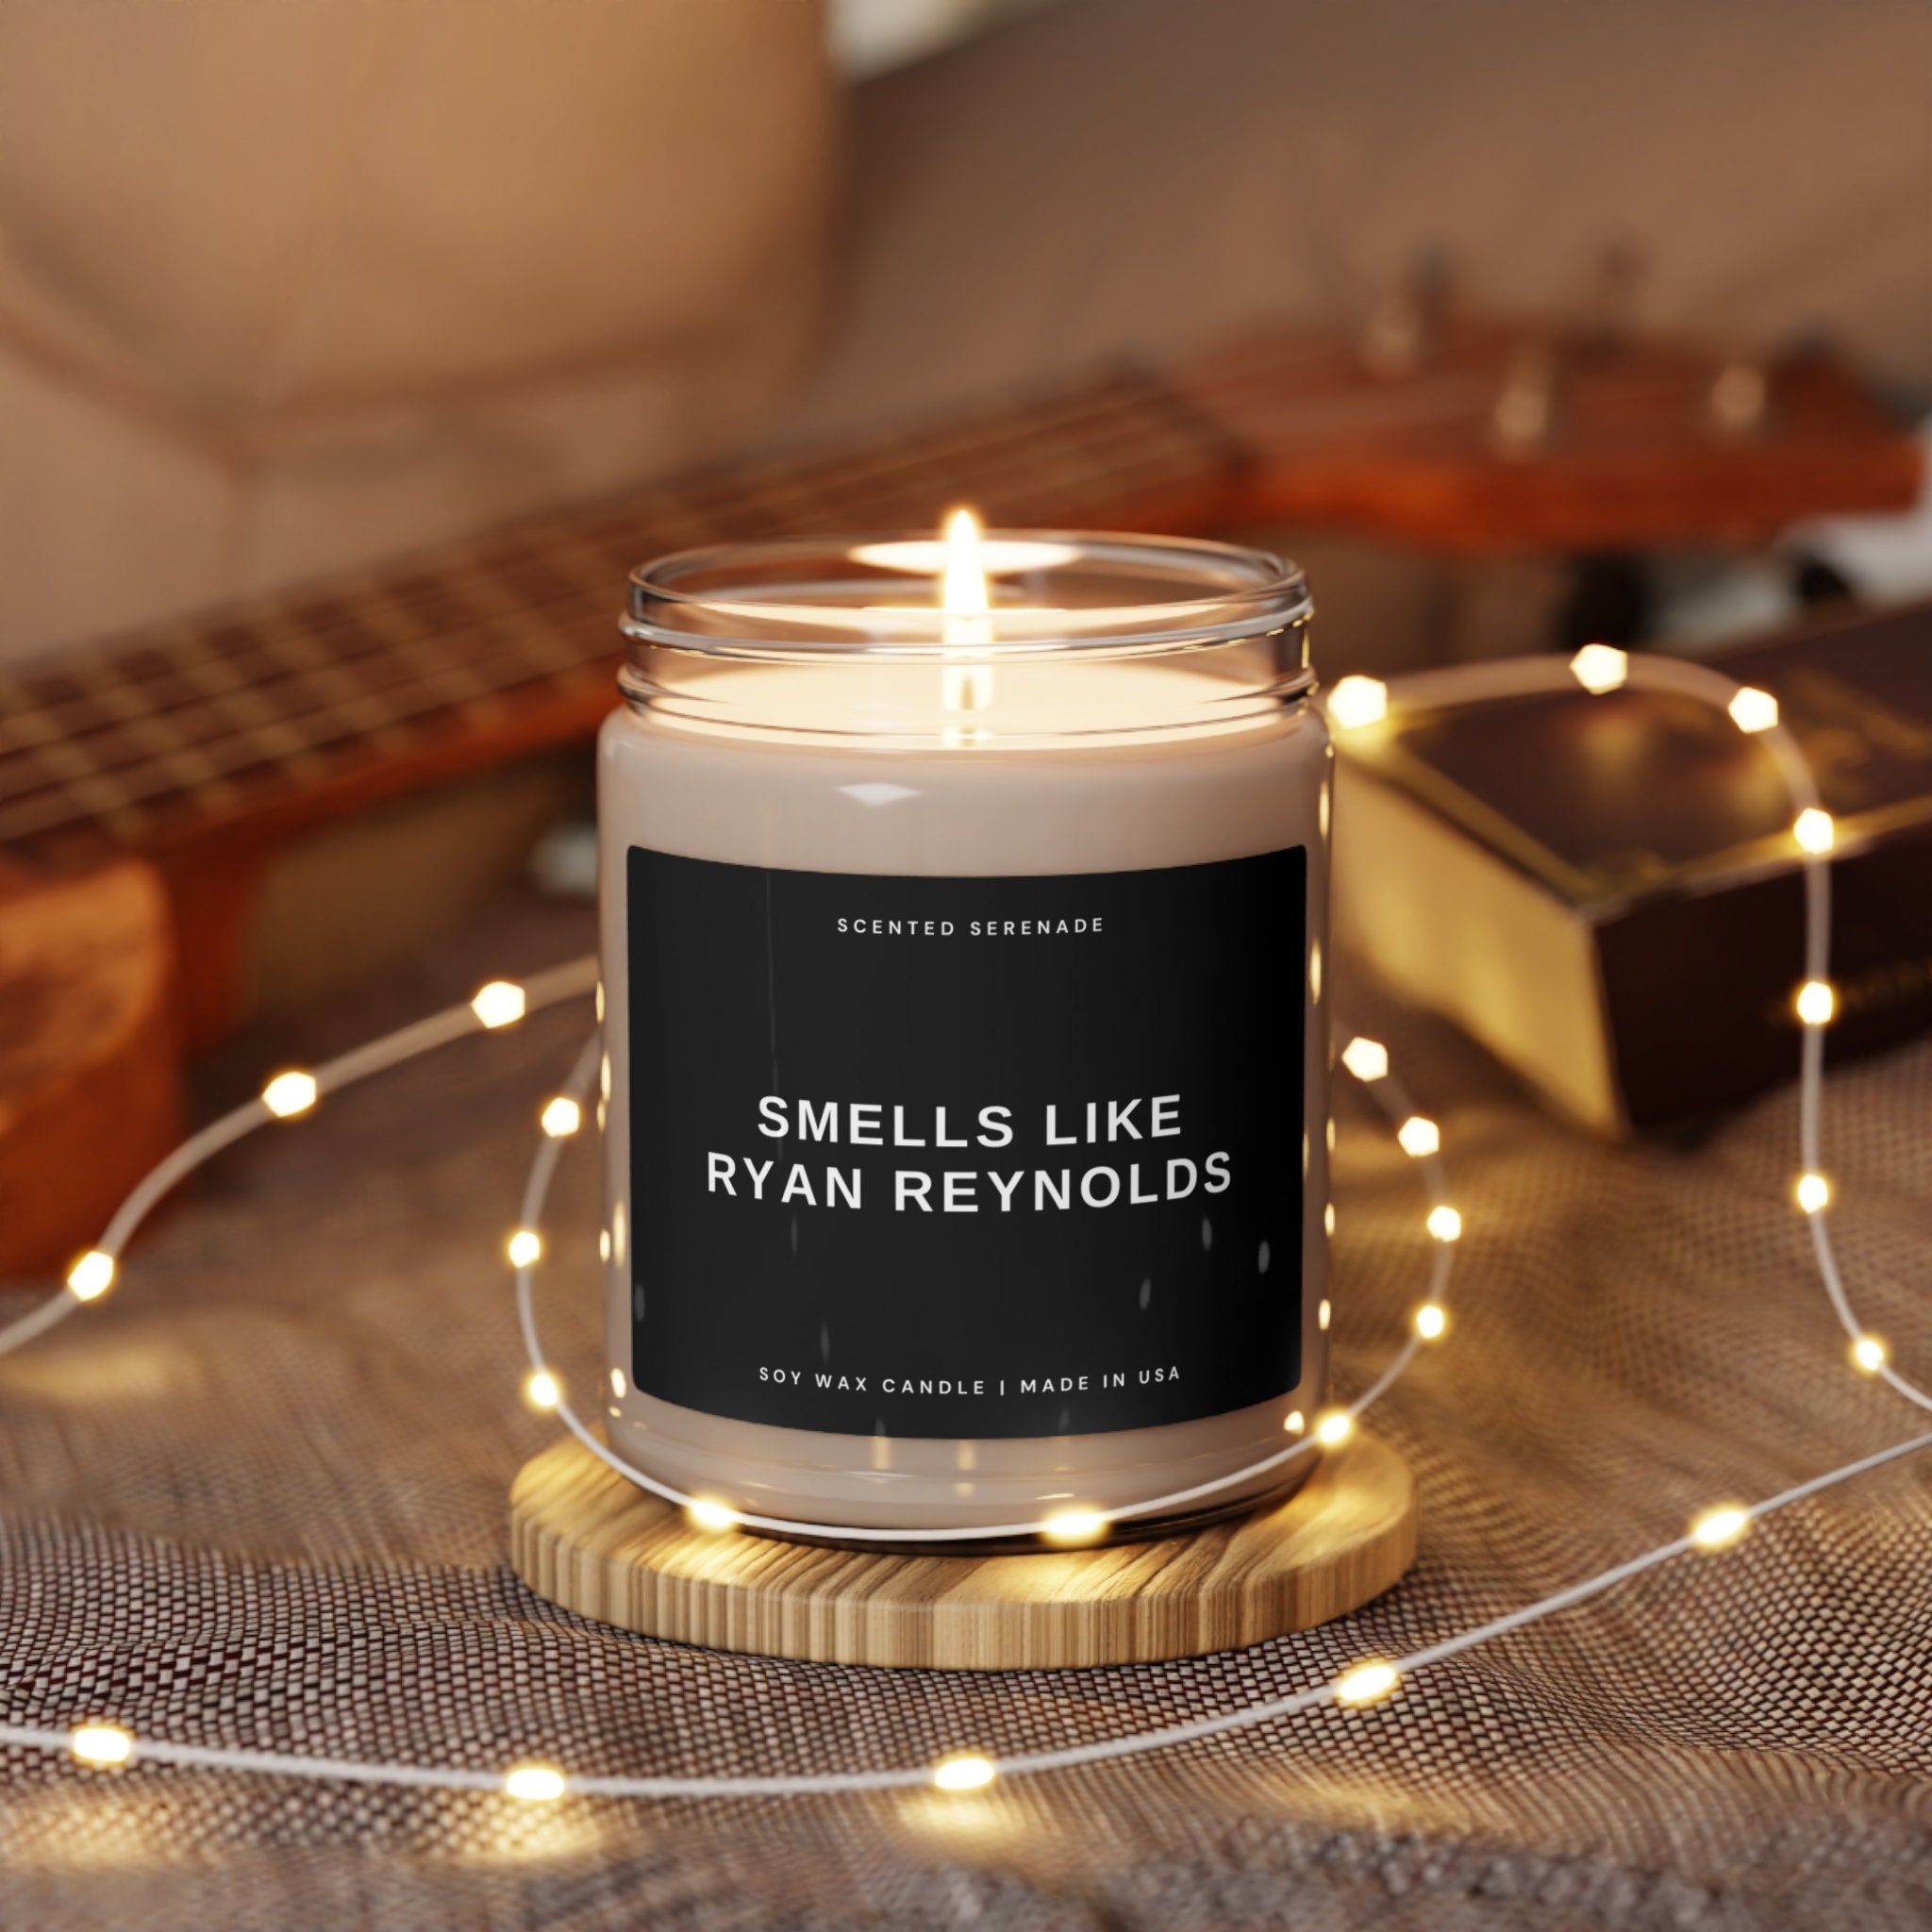 Ryan Reynolds Celebrity Prayer Candle - Funny Saint Candle - 8 inch Glass  Prayer Votive - 100% Handmade in USA - Novelty Celebrity Gift